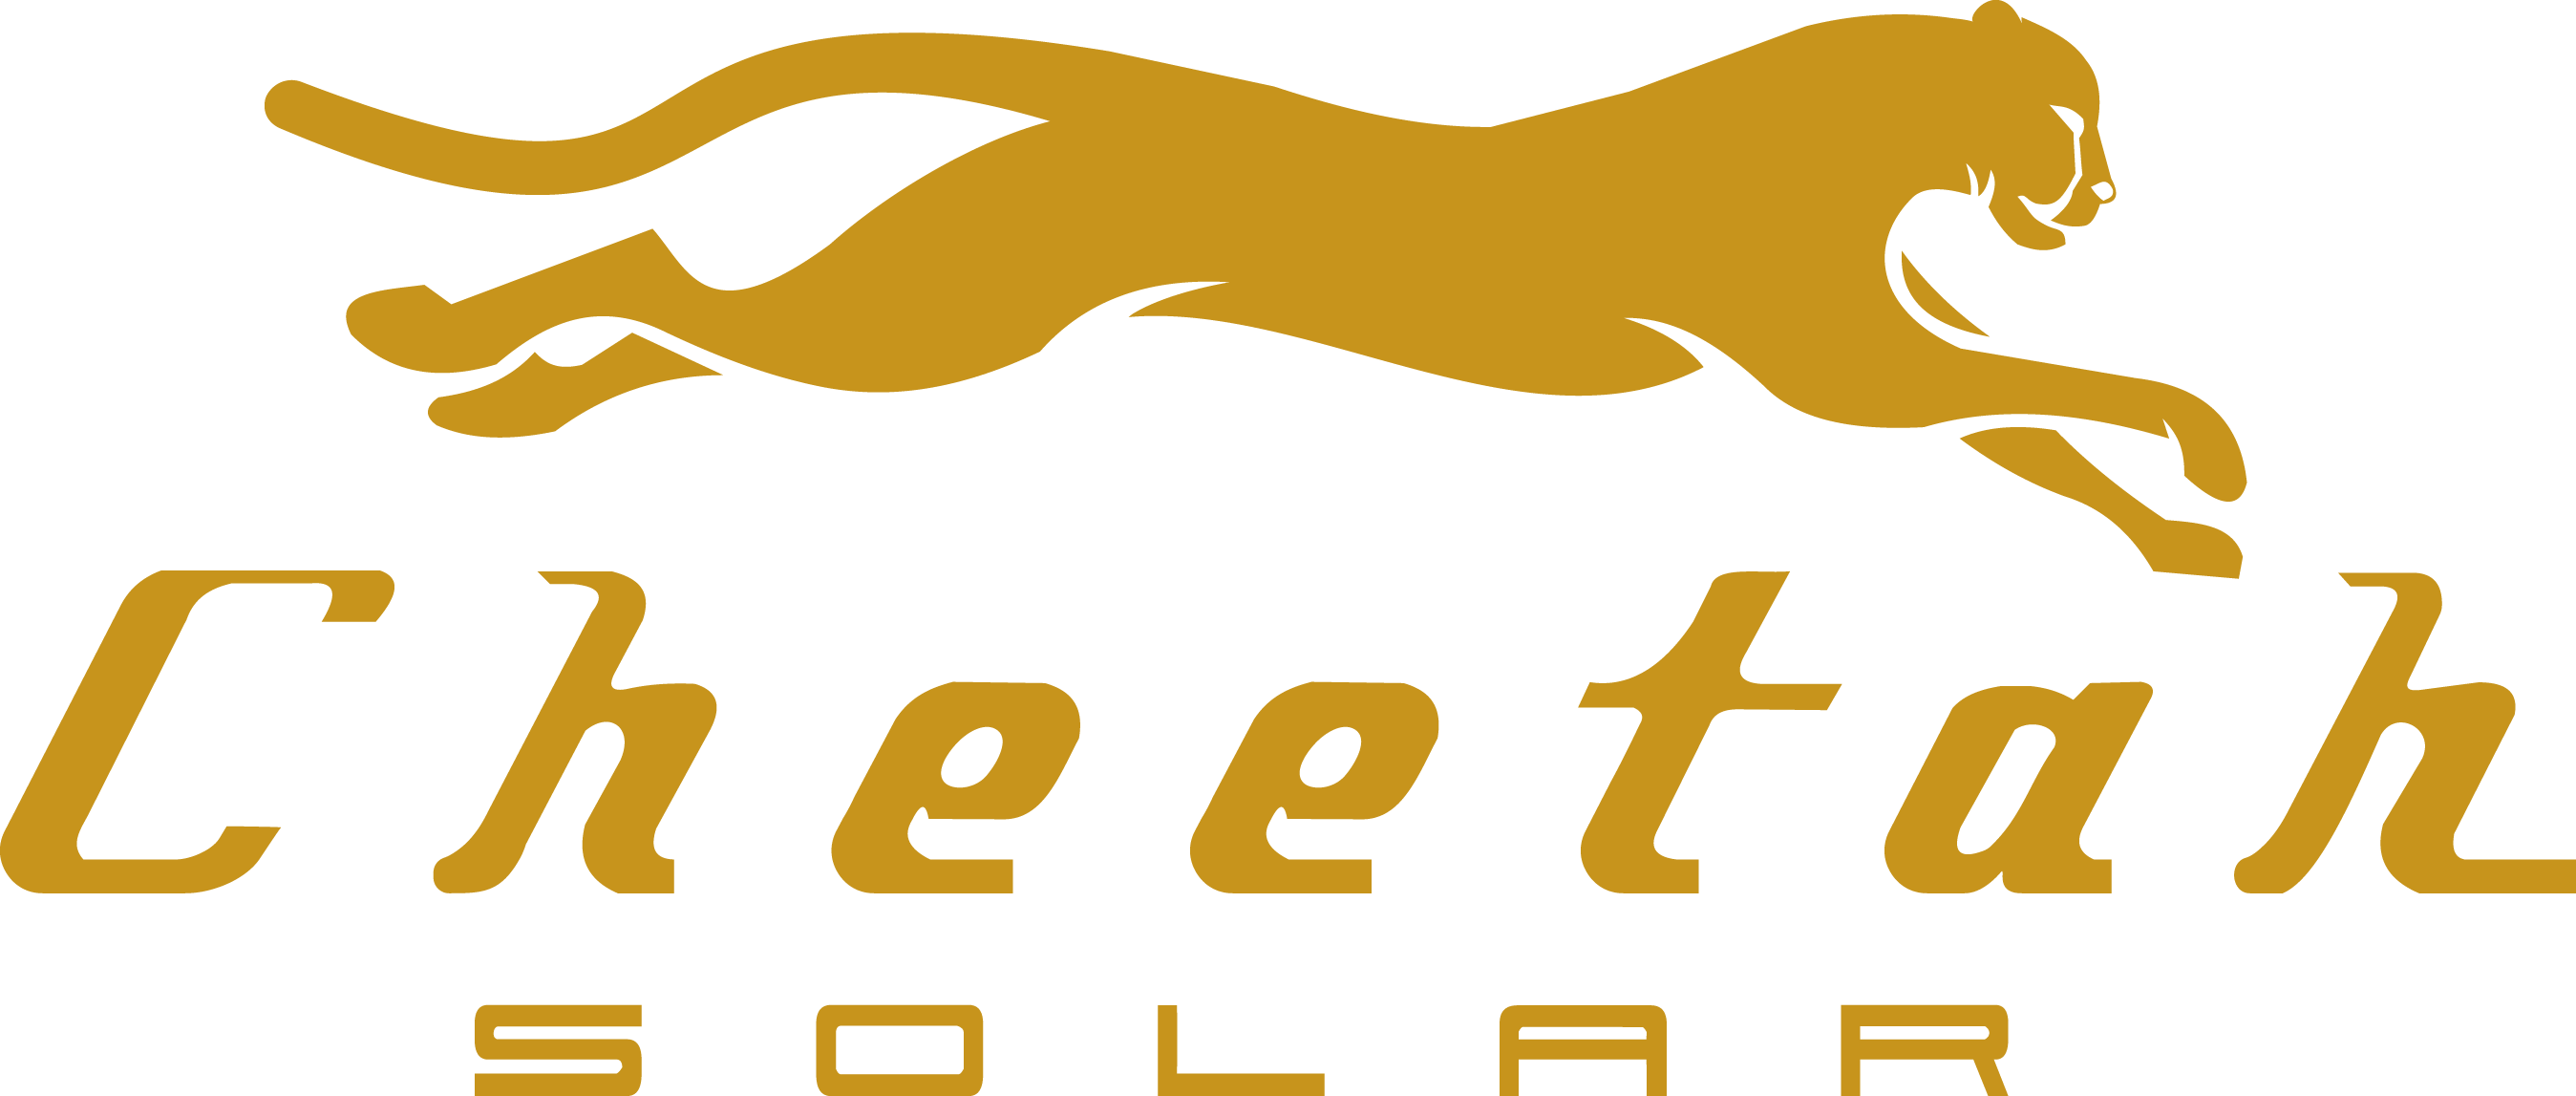 uploads/cheetah-logo.png